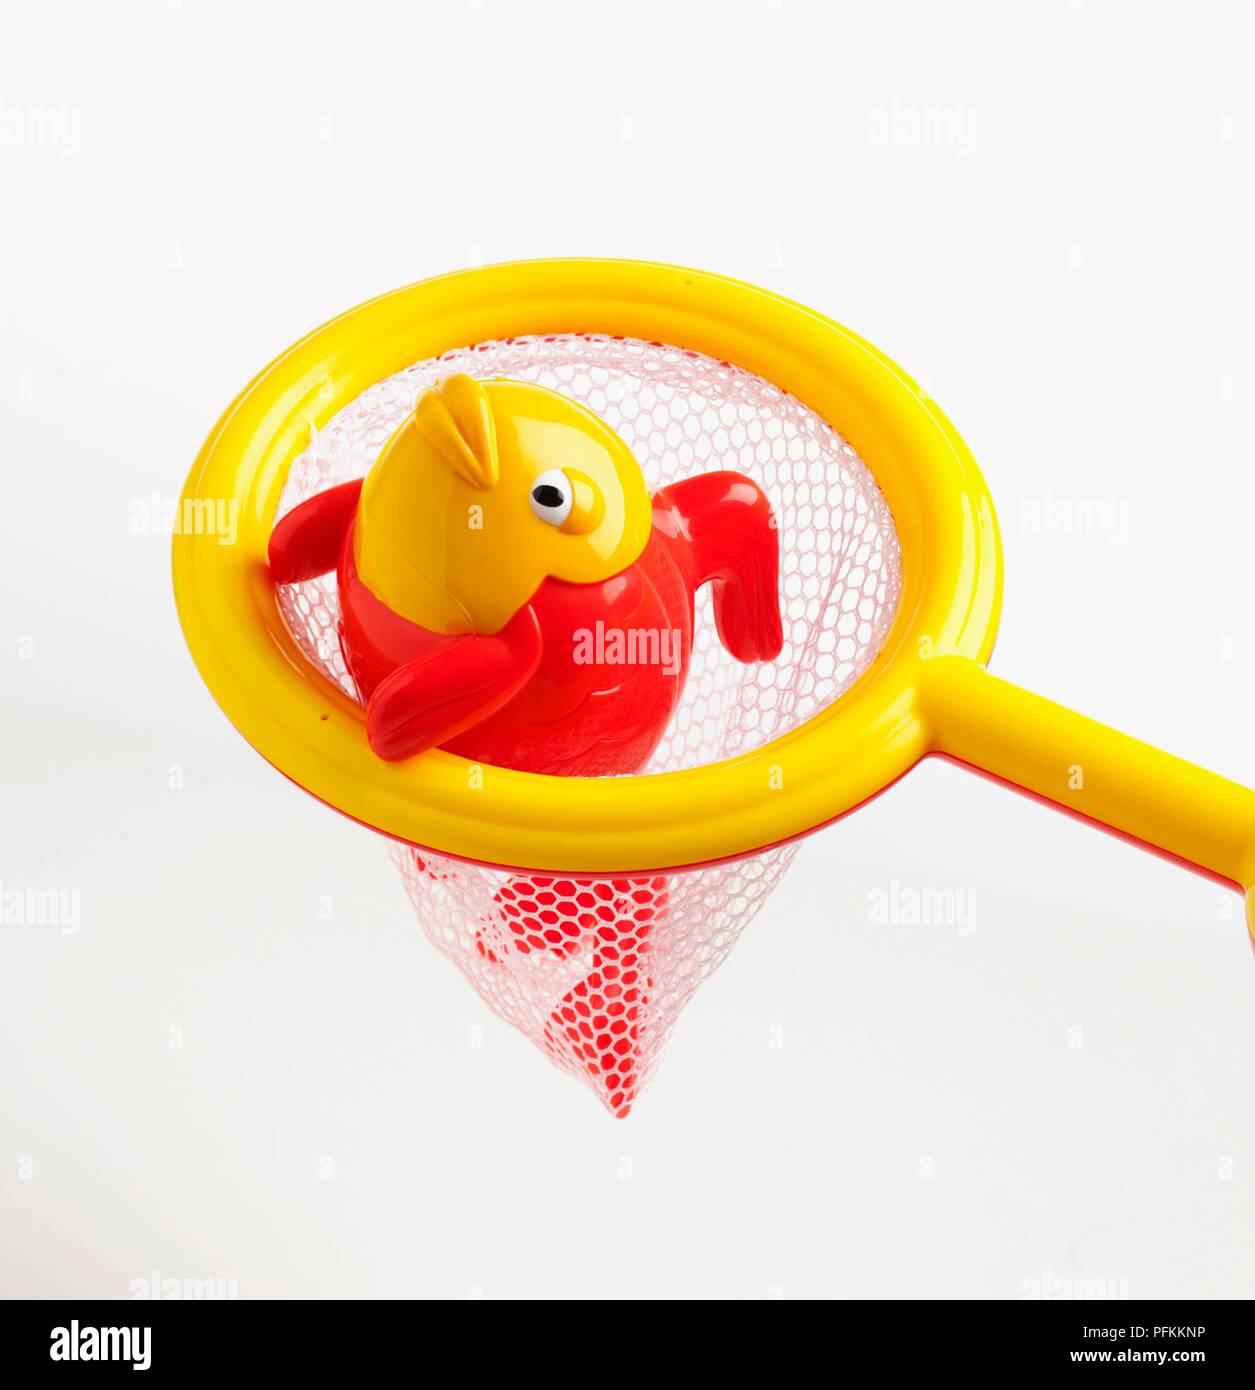 https://c8.alamy.com/comp/PFKKNP/red-and-yellow-plastic-fish-shaped-clockwork-bath-toy-in-fishing-net-PFKKNP.jpg